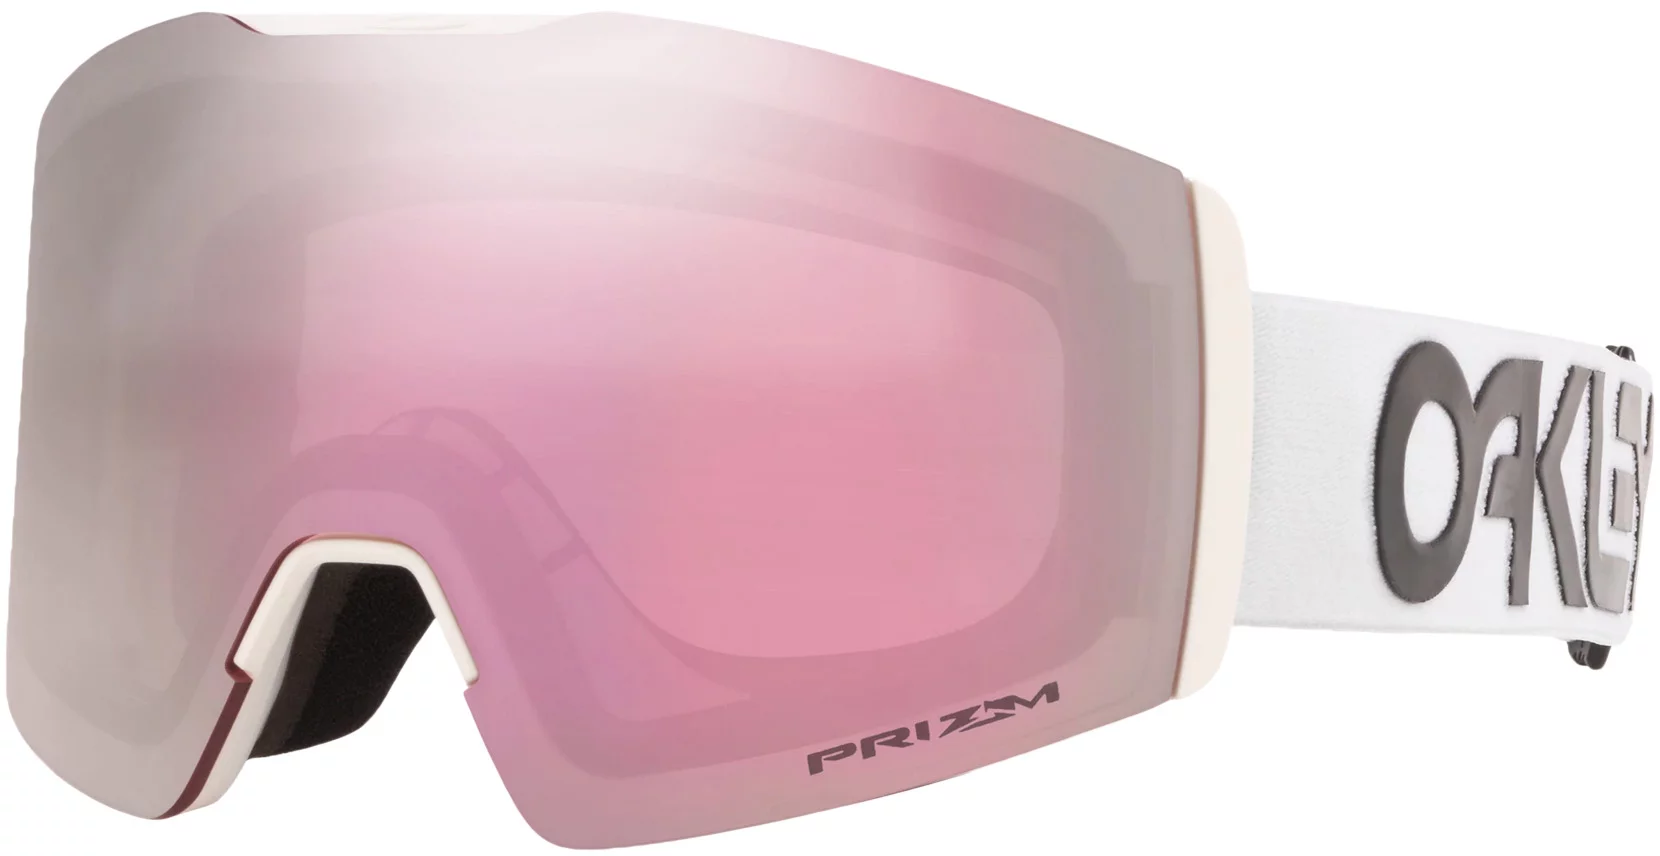 Oakley Fall Line M Goggles - factory pilot white/prizm hi pink iridium lens - Shipping | Tactics